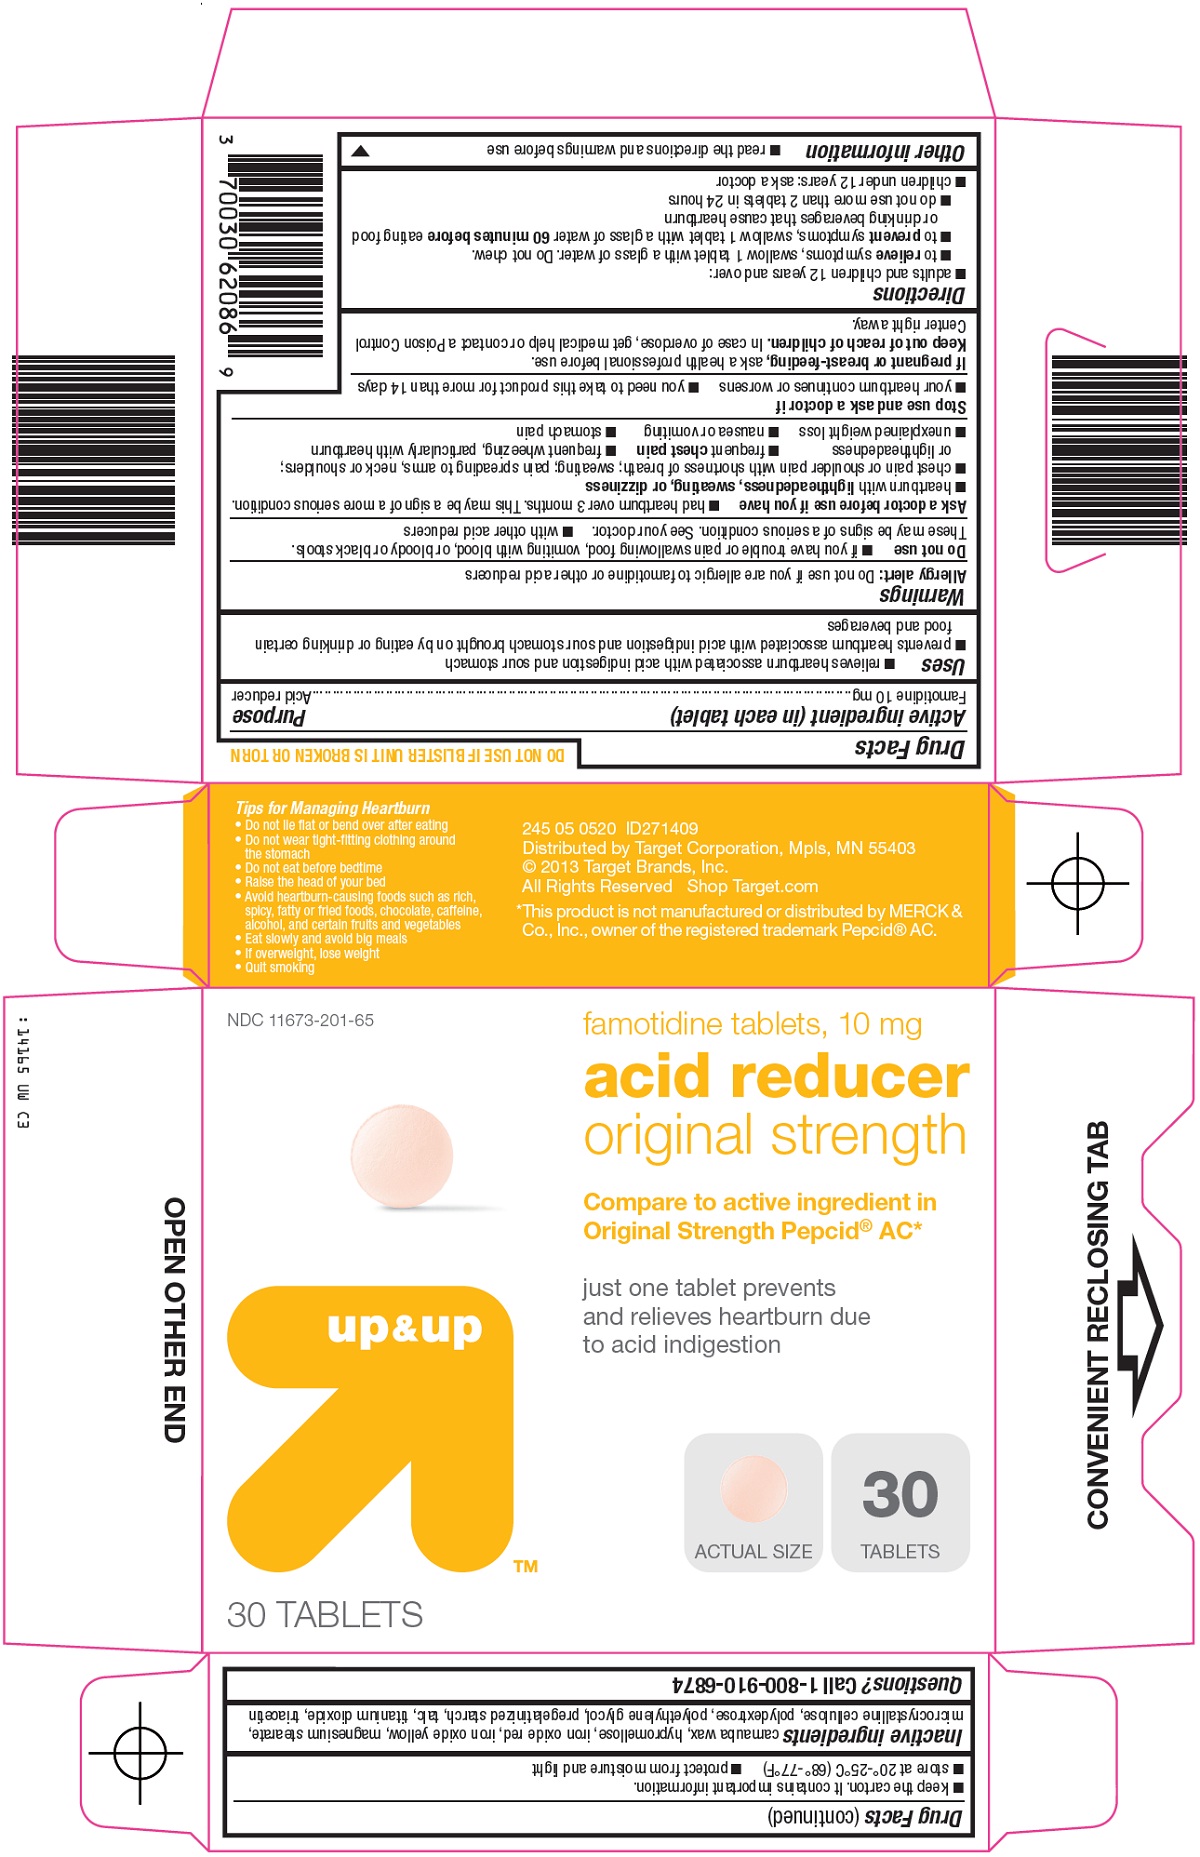 Acid Reducer Carton Image